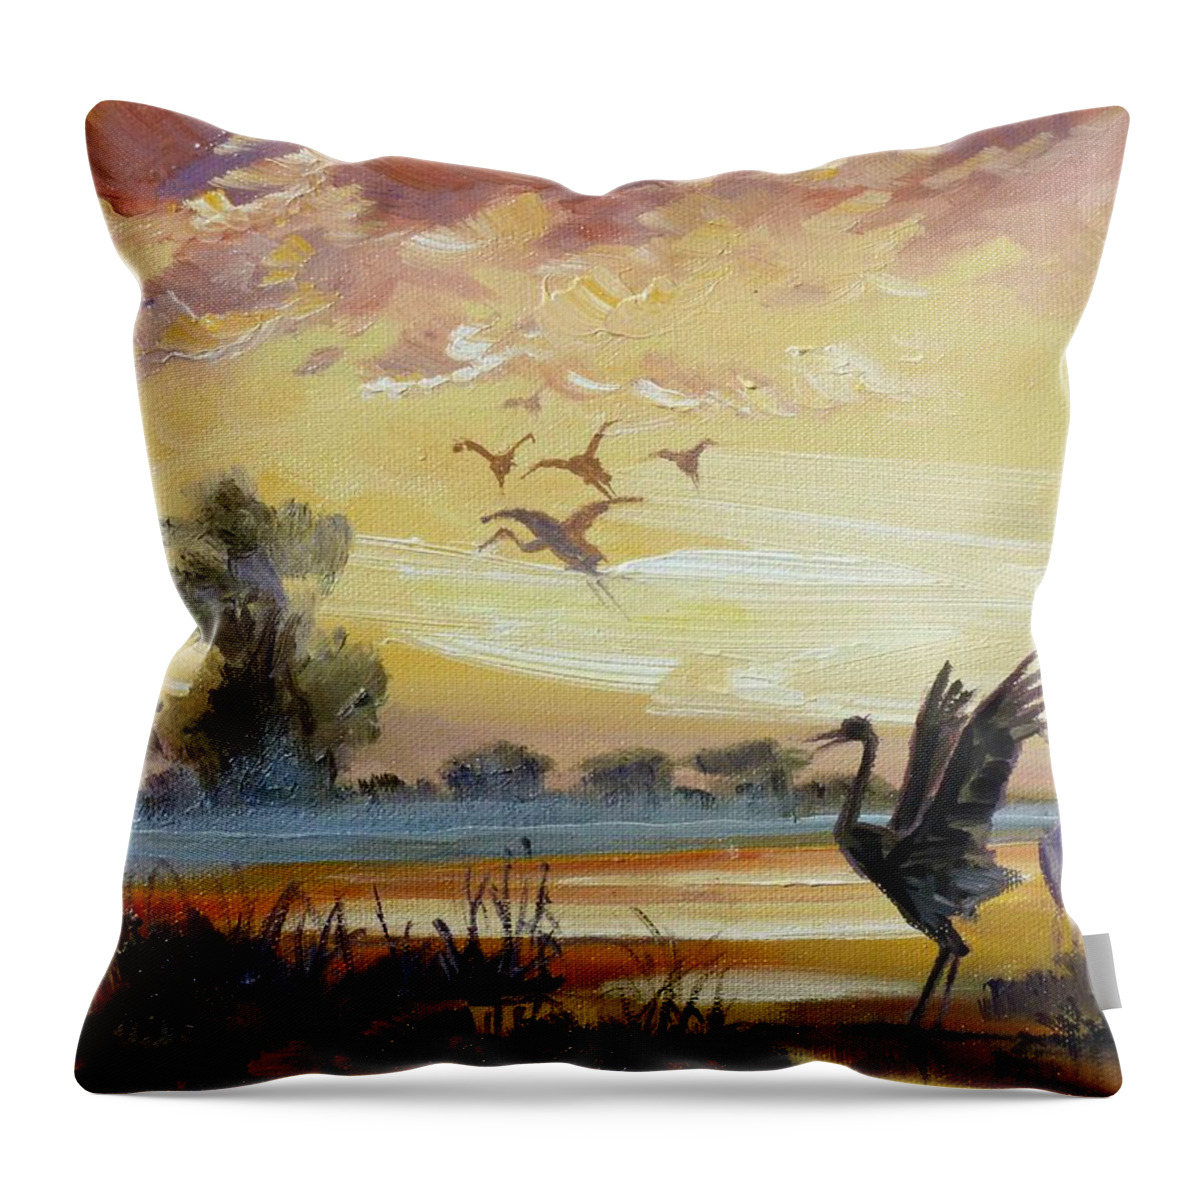 Cranes Throw Pillow featuring the painting Cranes - evening flight by Irek Szelag